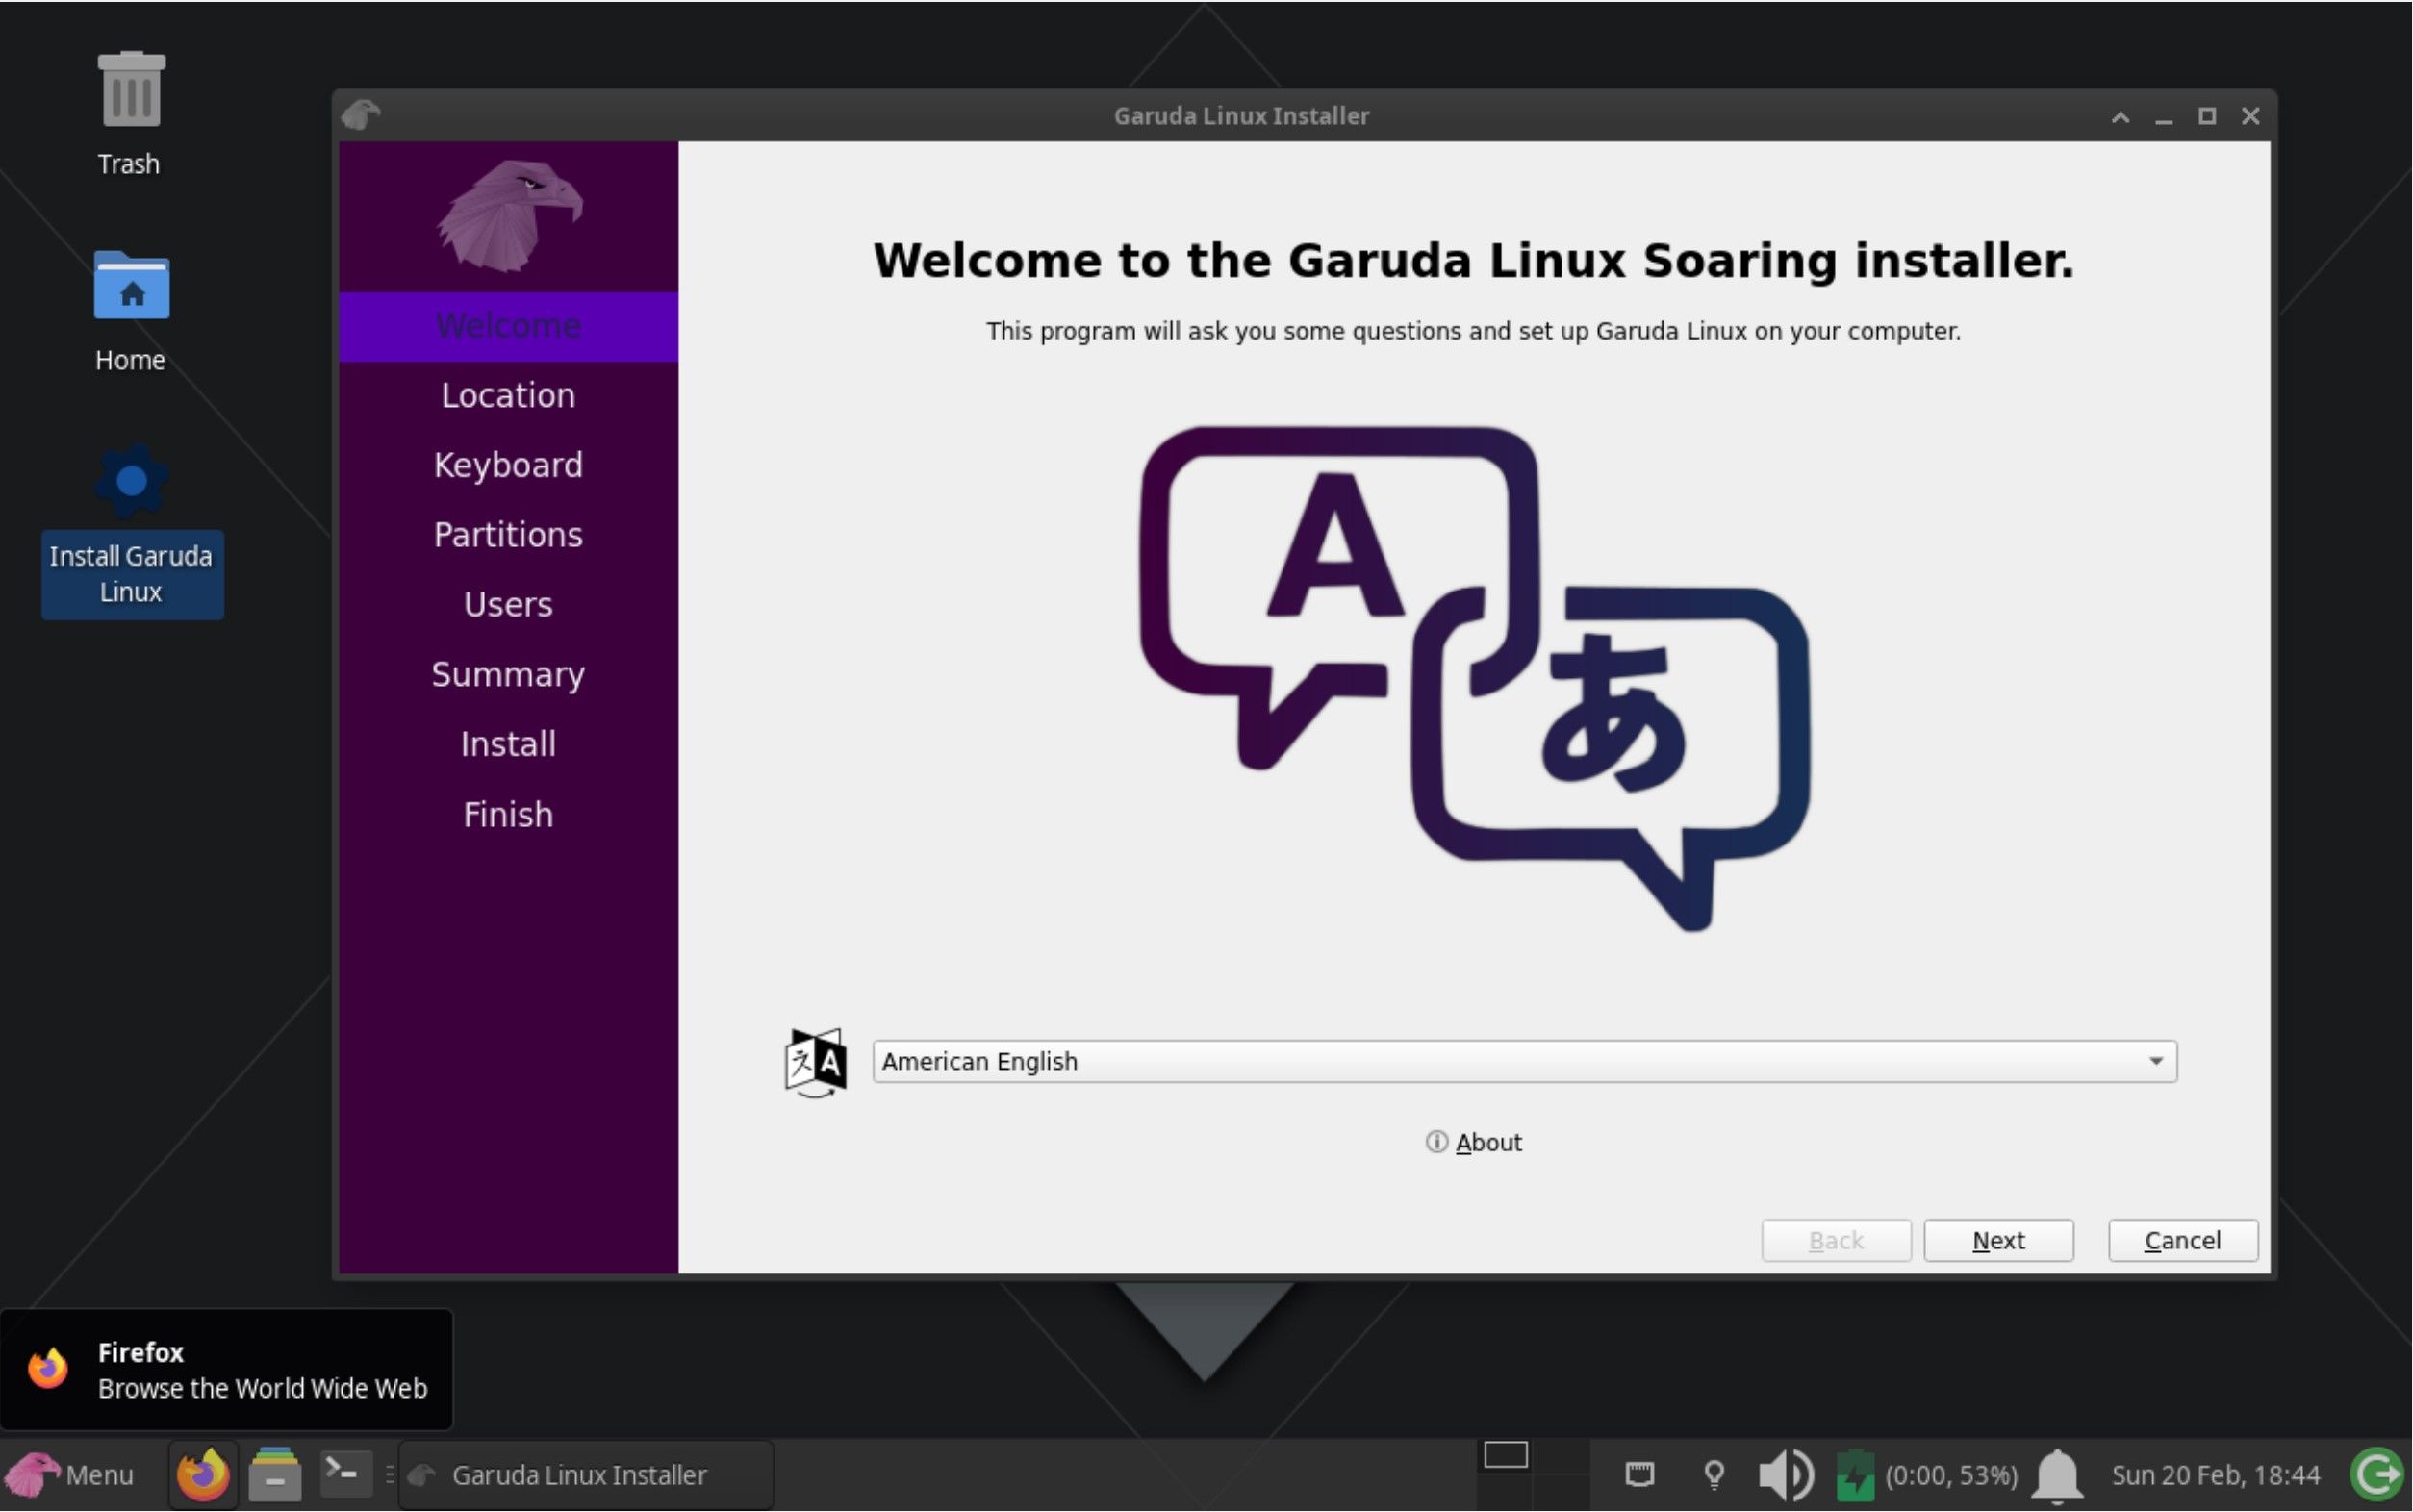 Install Garuda Linux Welcome screen